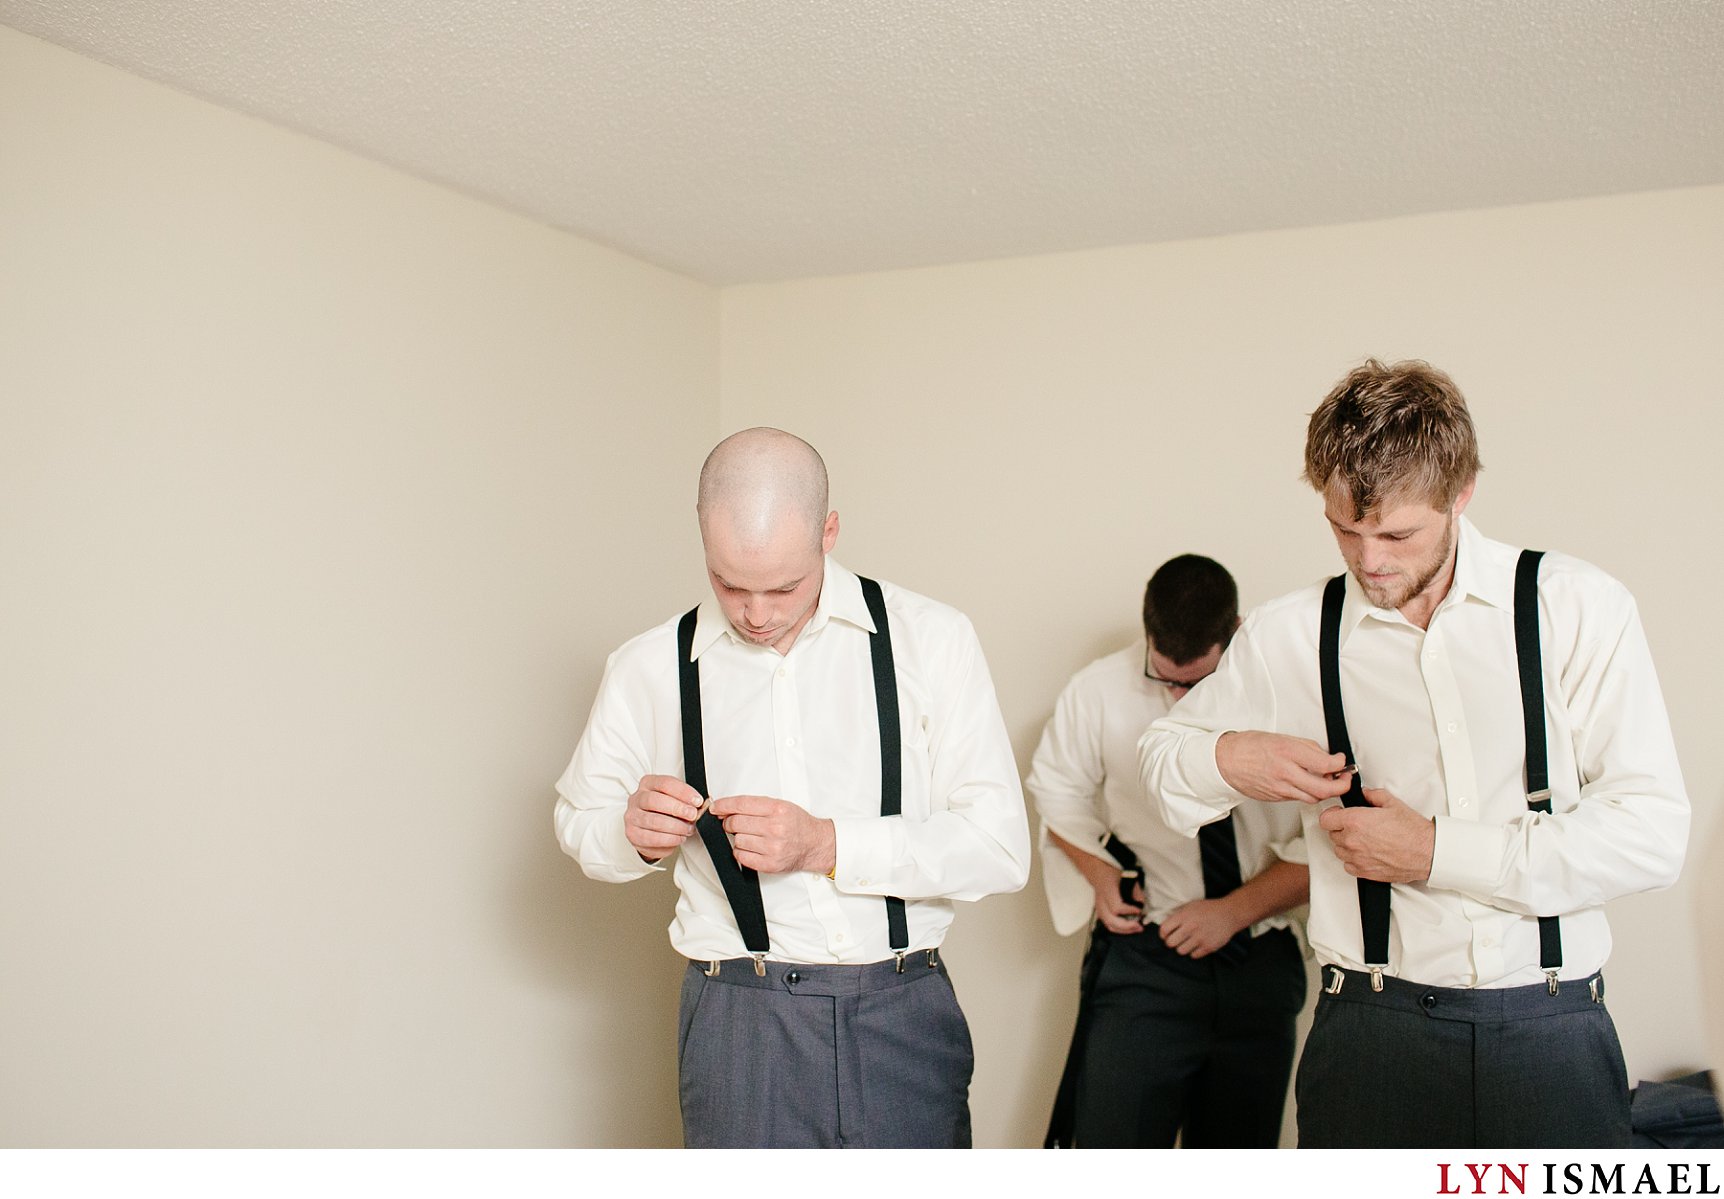 The groom and his groomsmen fix their suspenders.